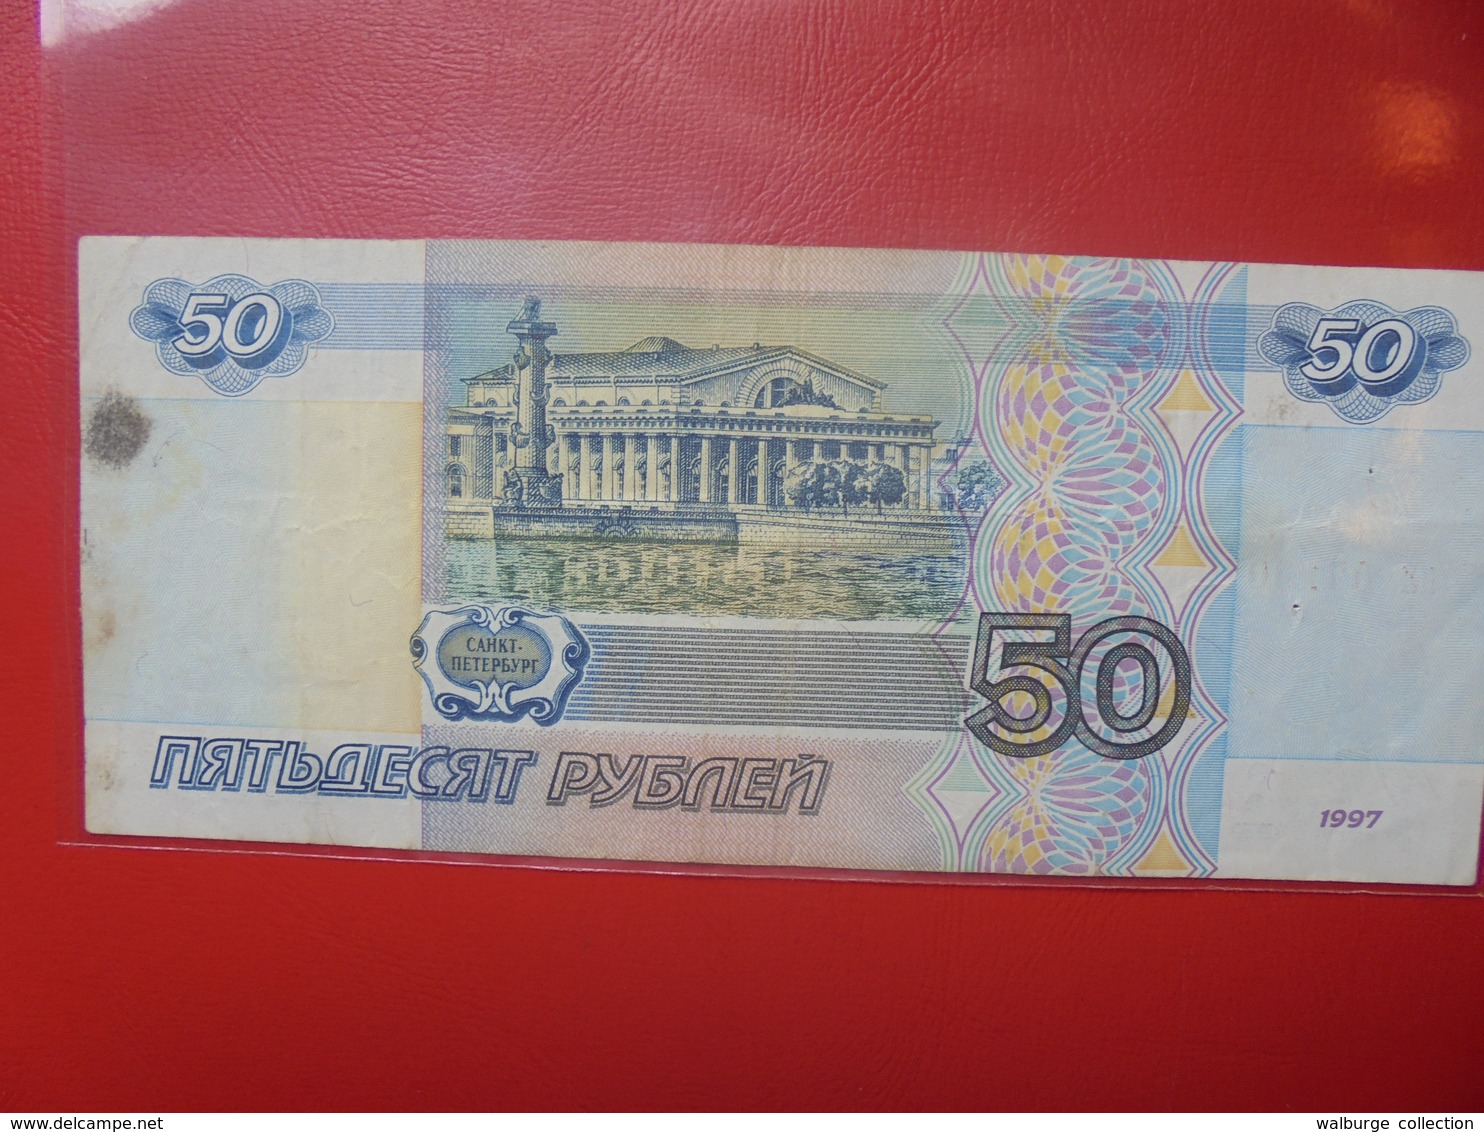 RUSSIE 50 ROUBLES 1997 CIRCULER  (B.4) - Russia